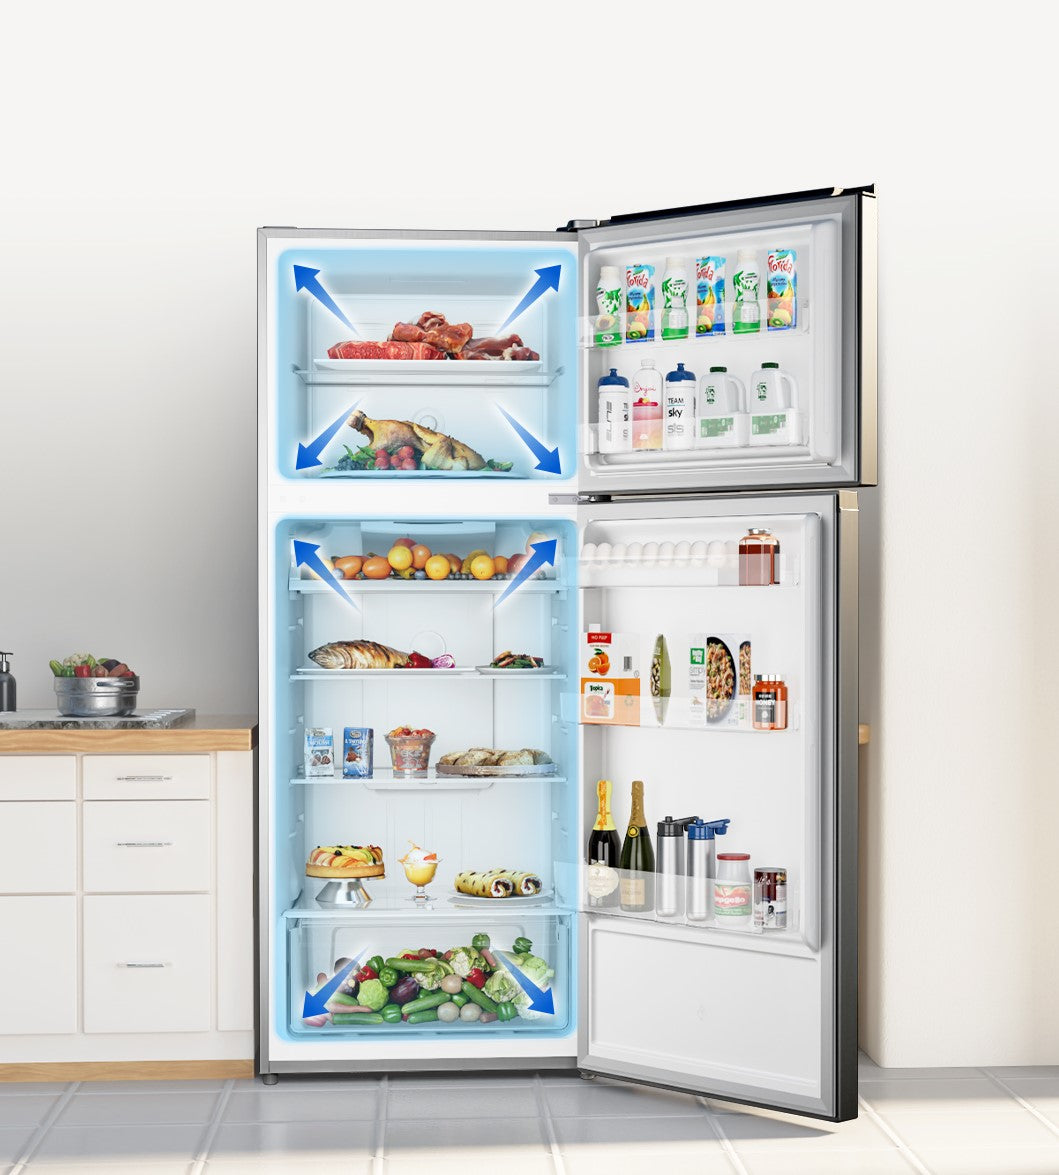 prism-refrigerators